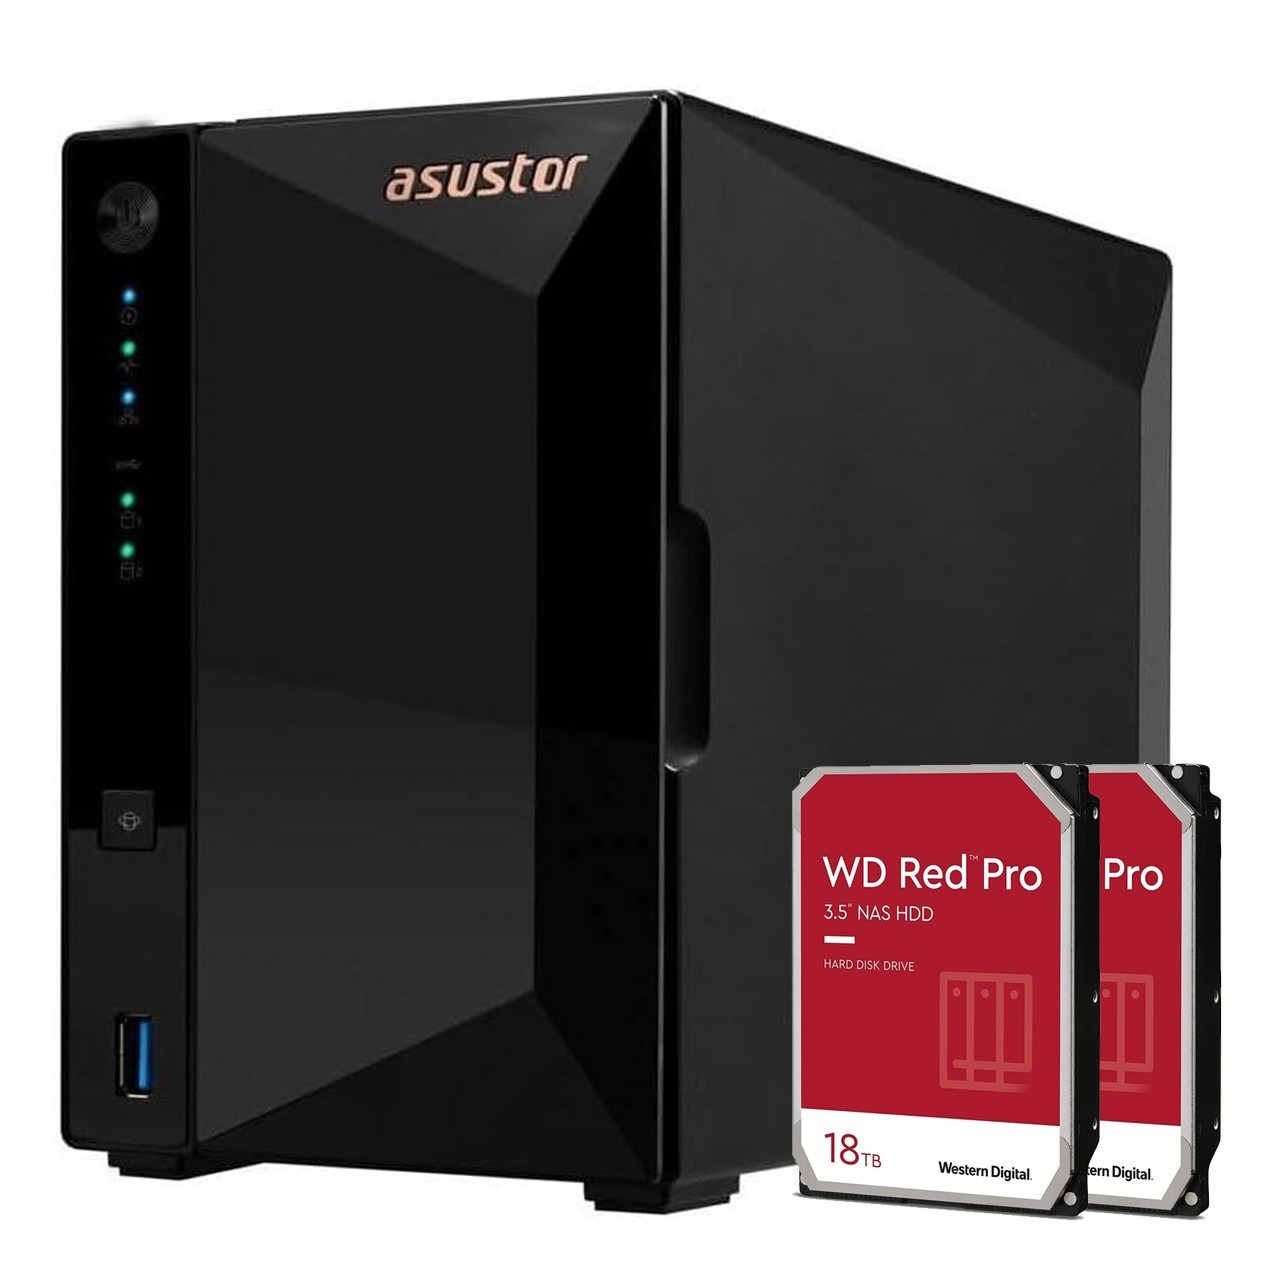 Asustor DRIVESTOR 2 Pro 2 Bay NAS Storage + 36TB (2x18TB) WD Red 3.5" HDD $770 + Free Shipping